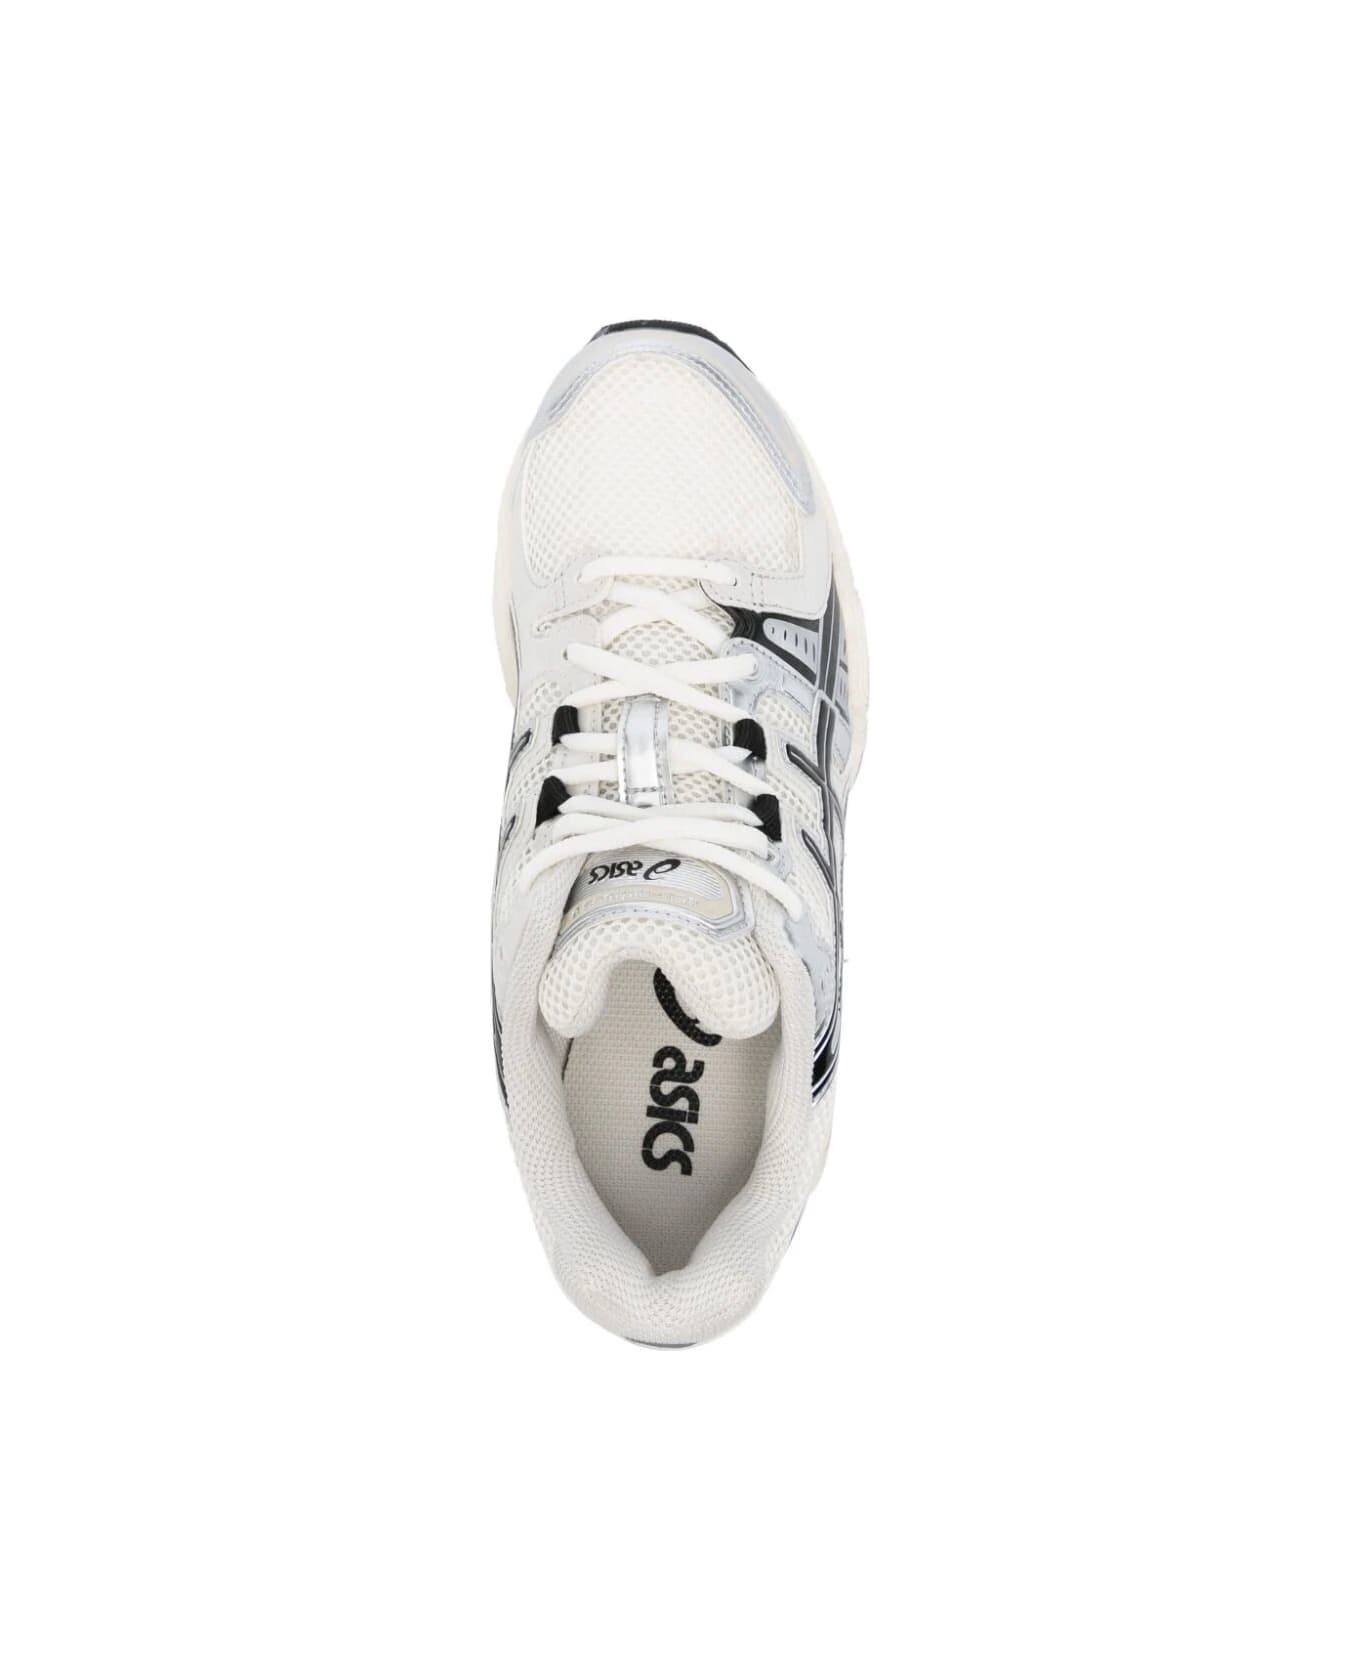 Asics Gel Nimbus 9 Sneakers - Cream Black スニーカー